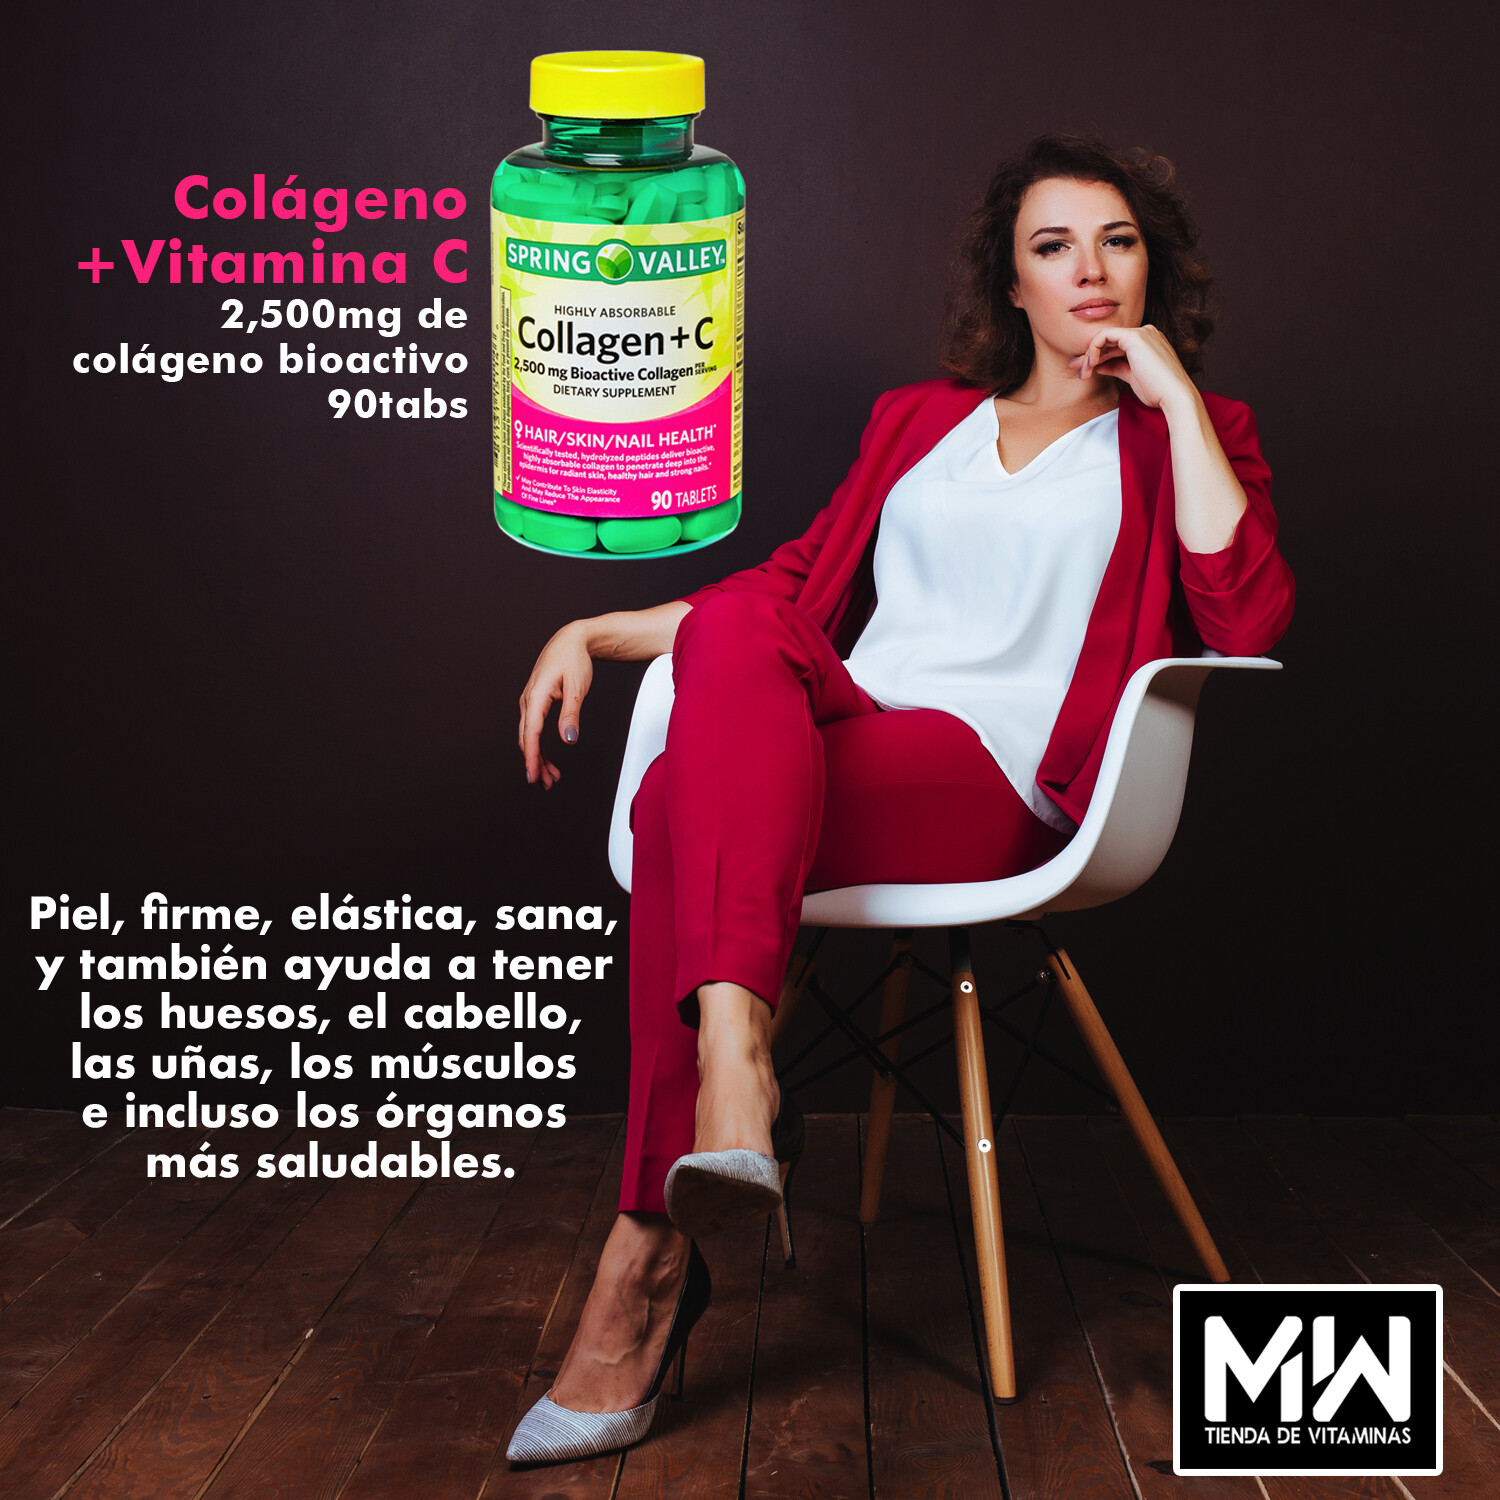 Colágeno + Vitamina C / Collagen + C, 90 tabs